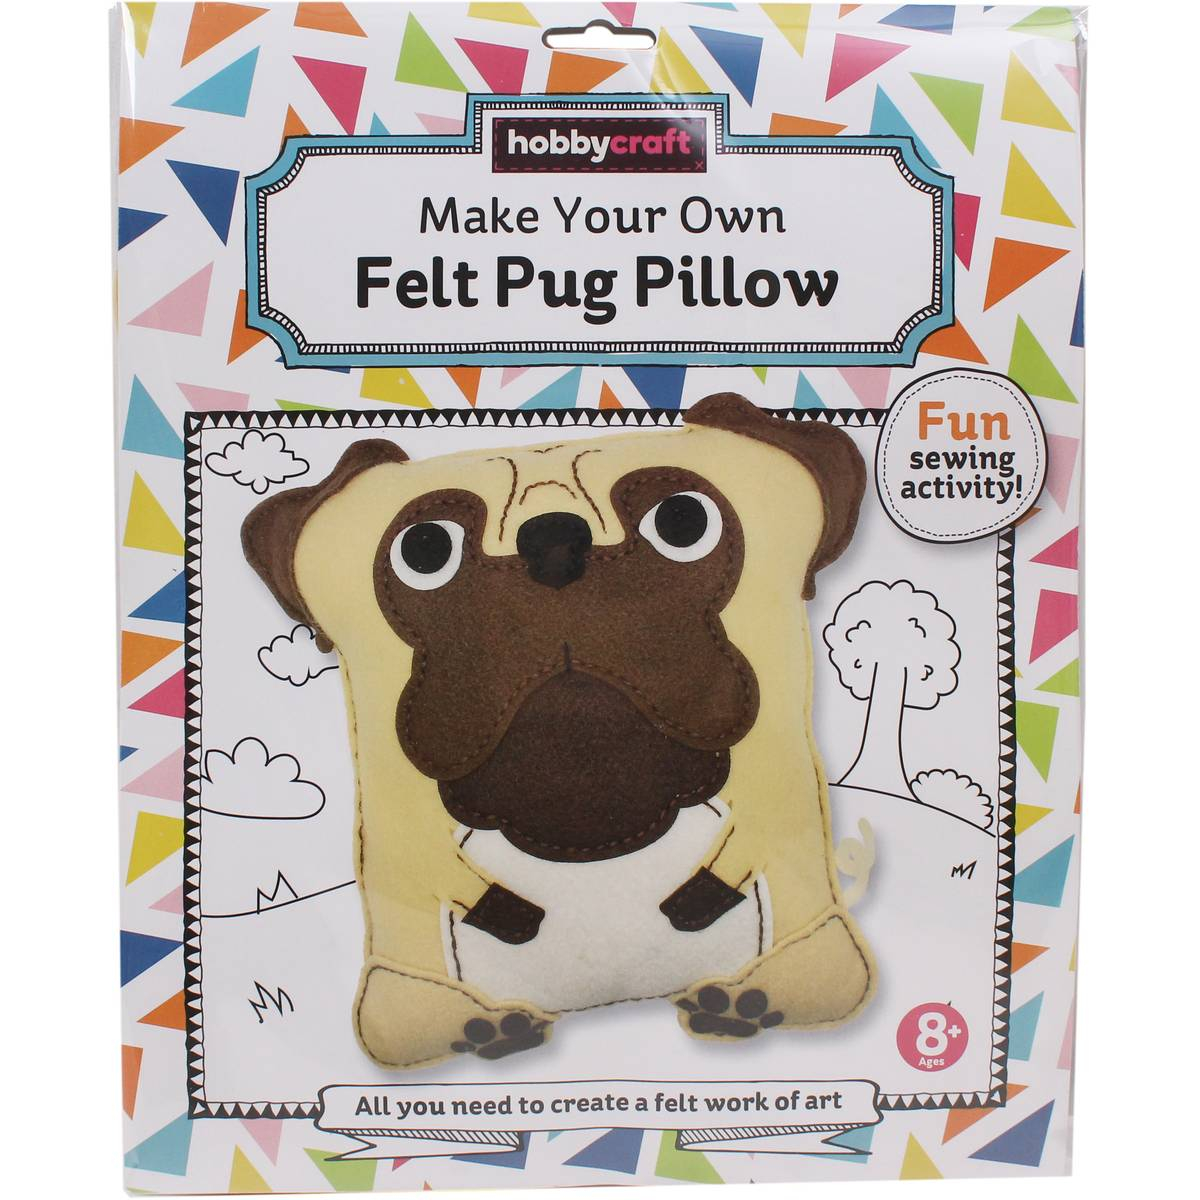 How To Make An Origami Pug Make Your Own Felt Pug Pillow Kit